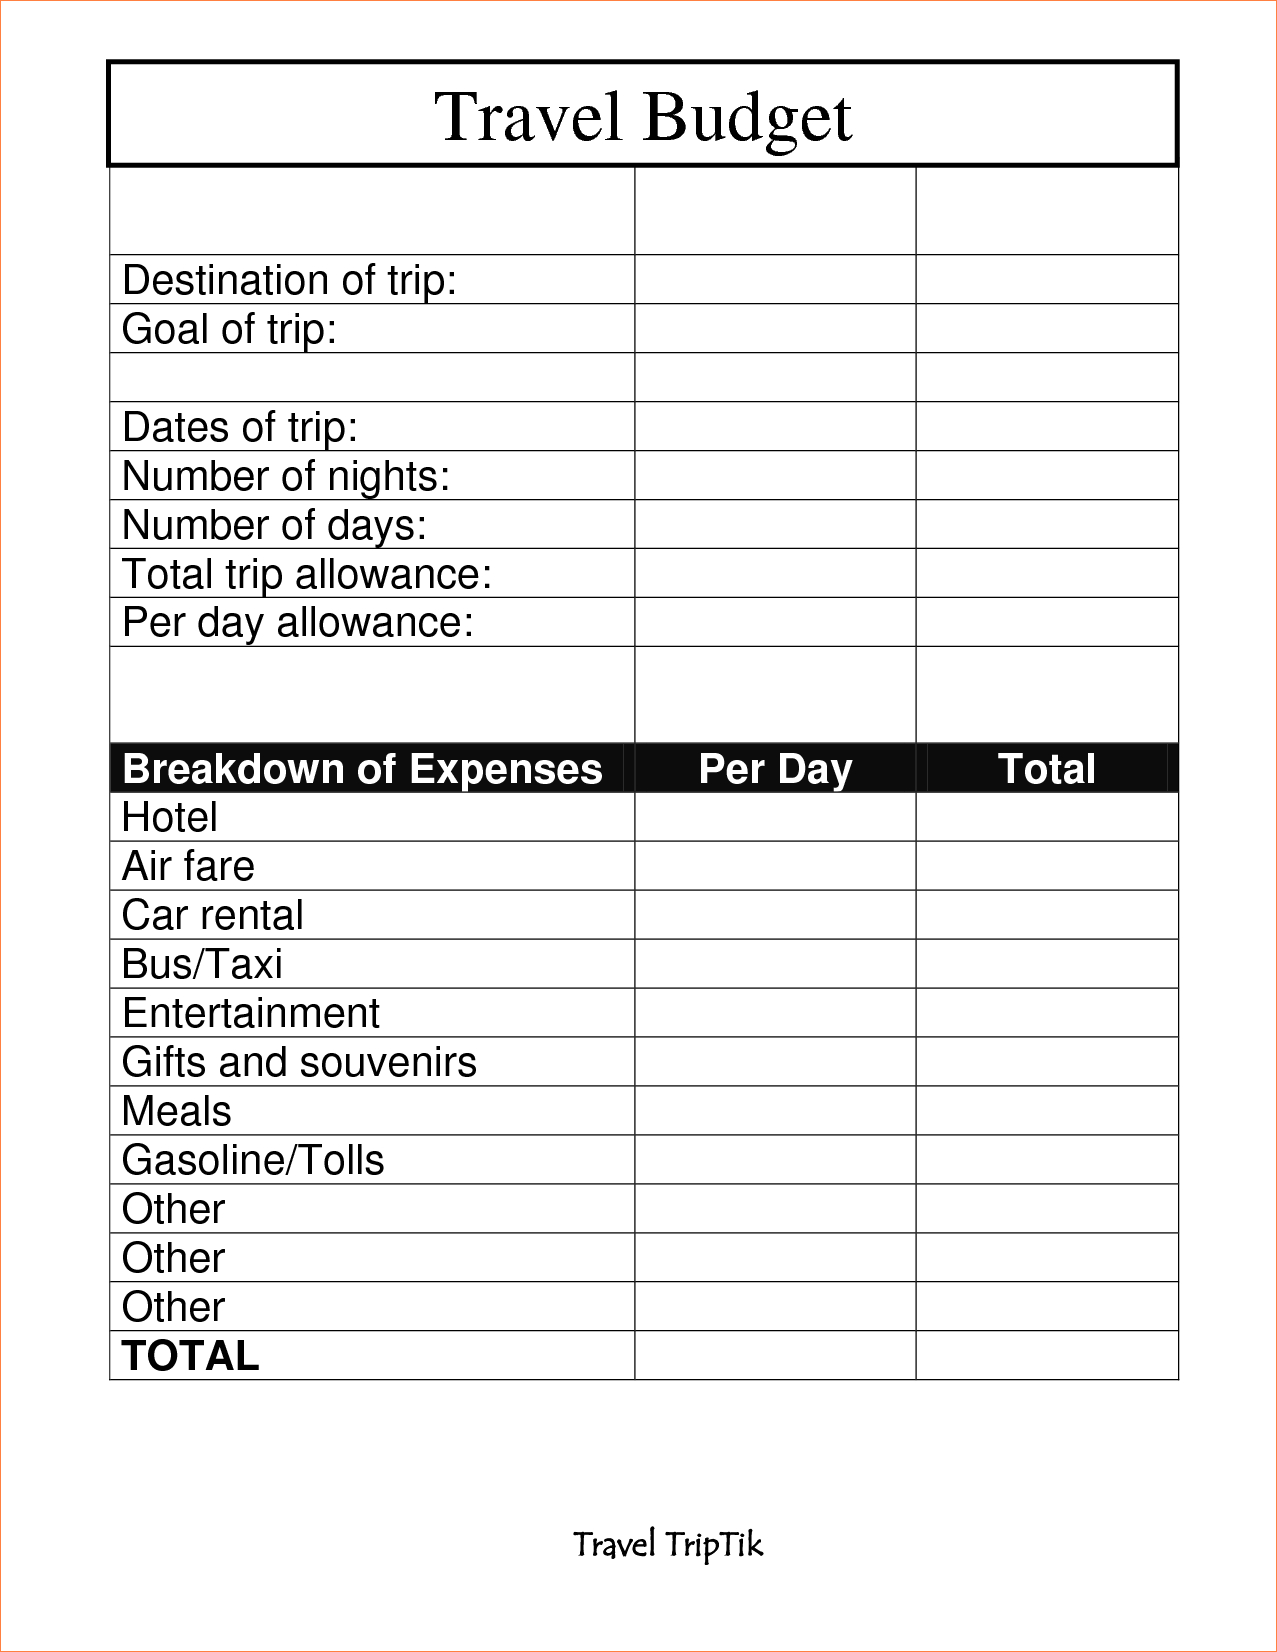 travel-expenses-spreadsheet-template-regarding-example-of-travel-budget